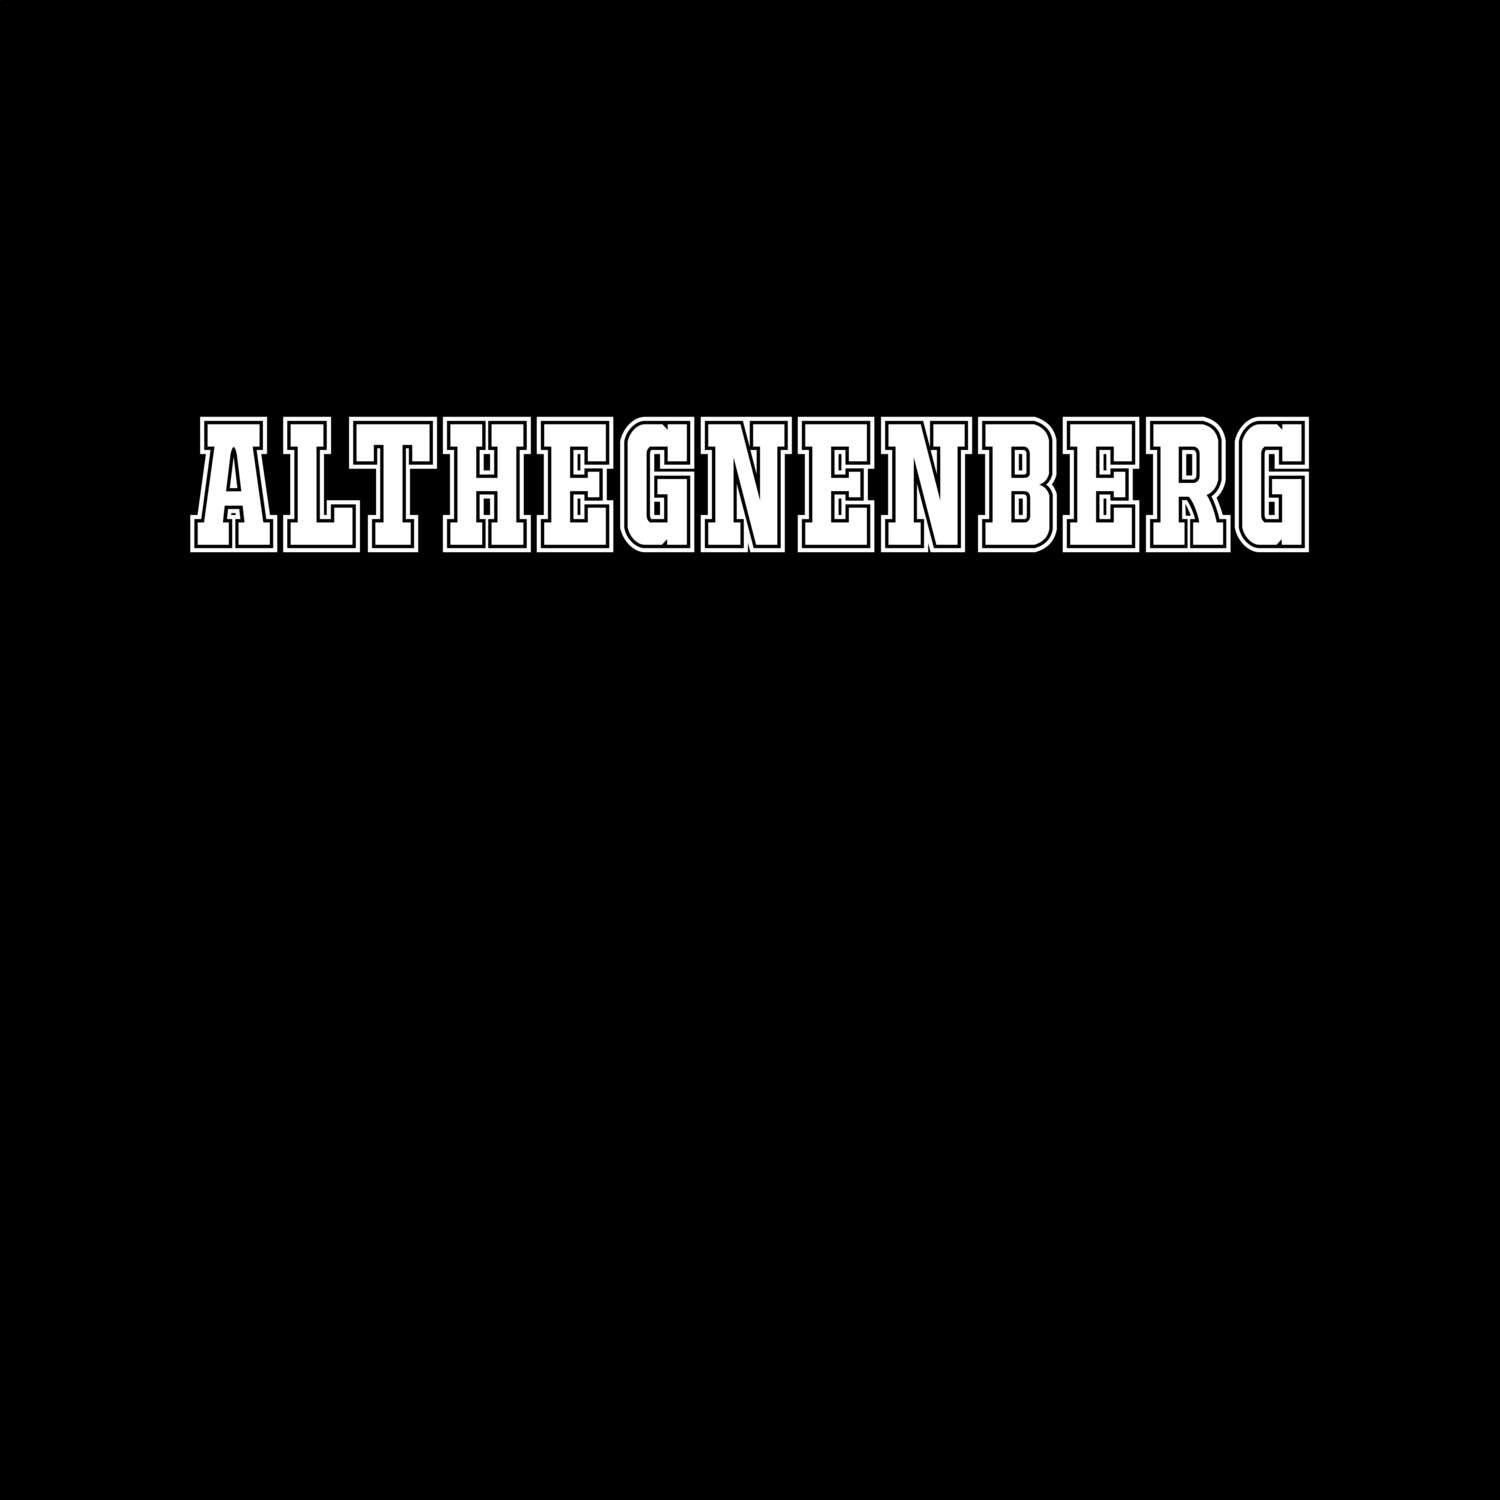 Althegnenberg T-Shirt »Classic«